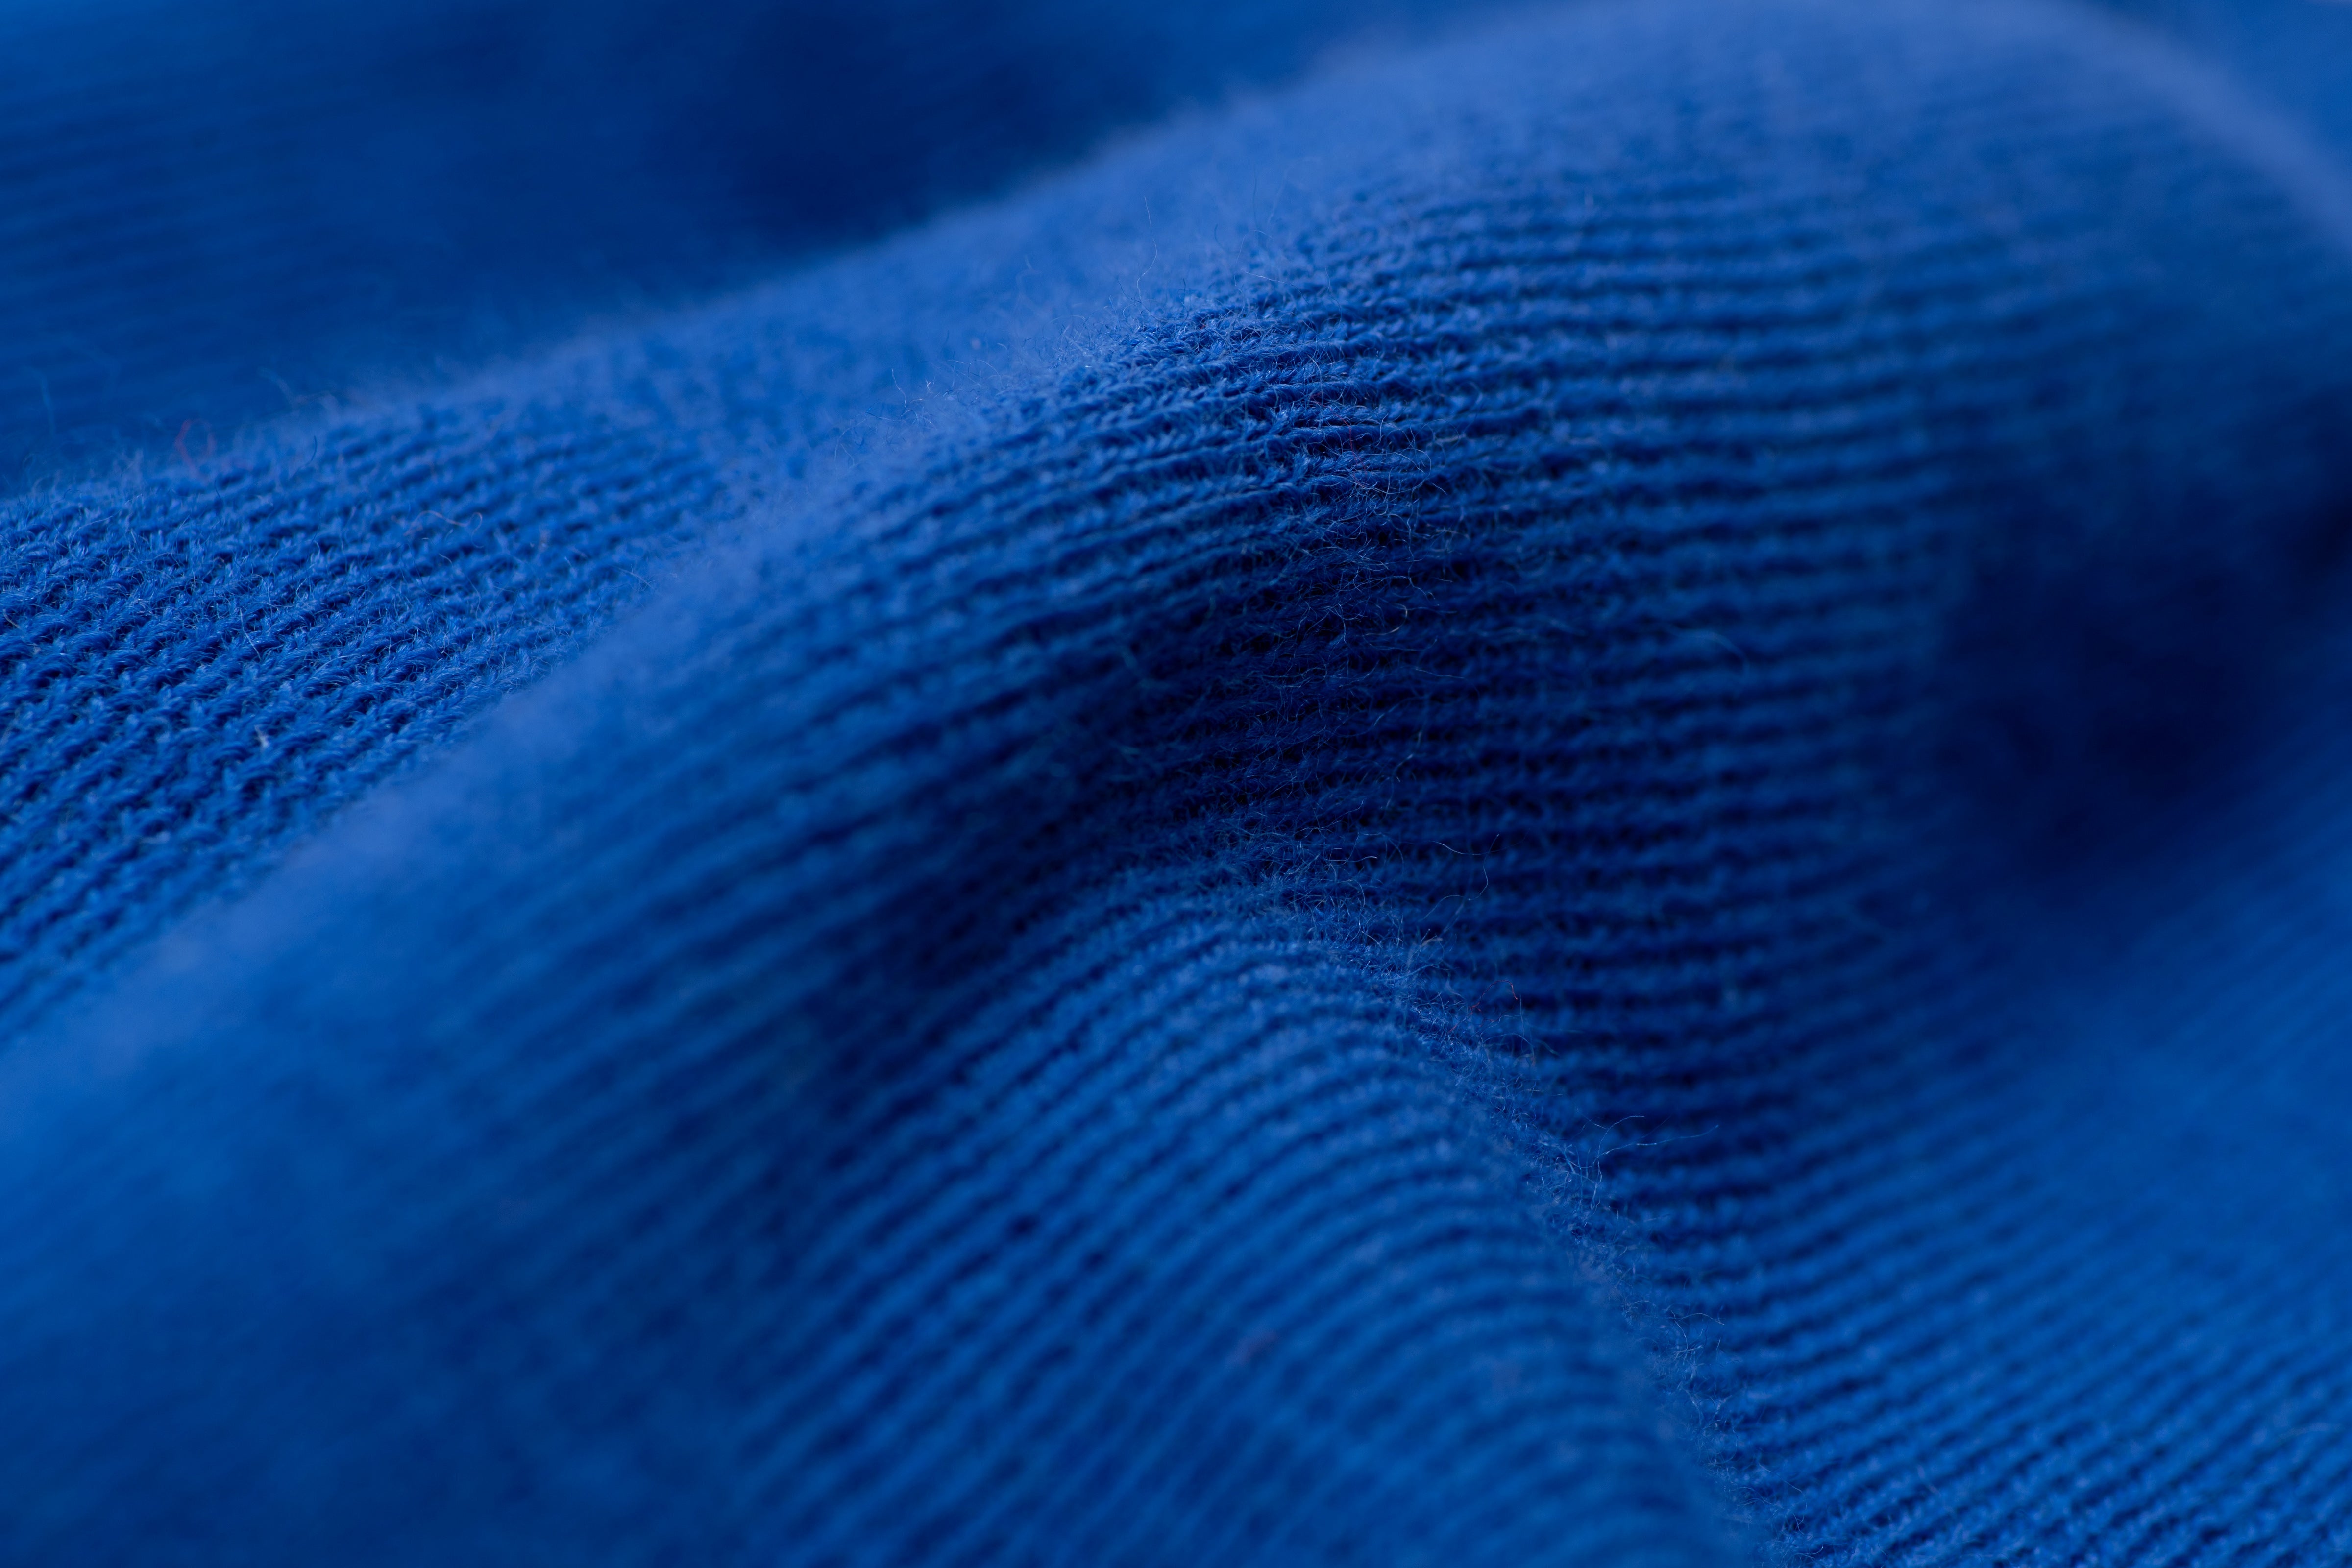 Vintage Busnel Women's Blue Wool French Vest, SIZE S